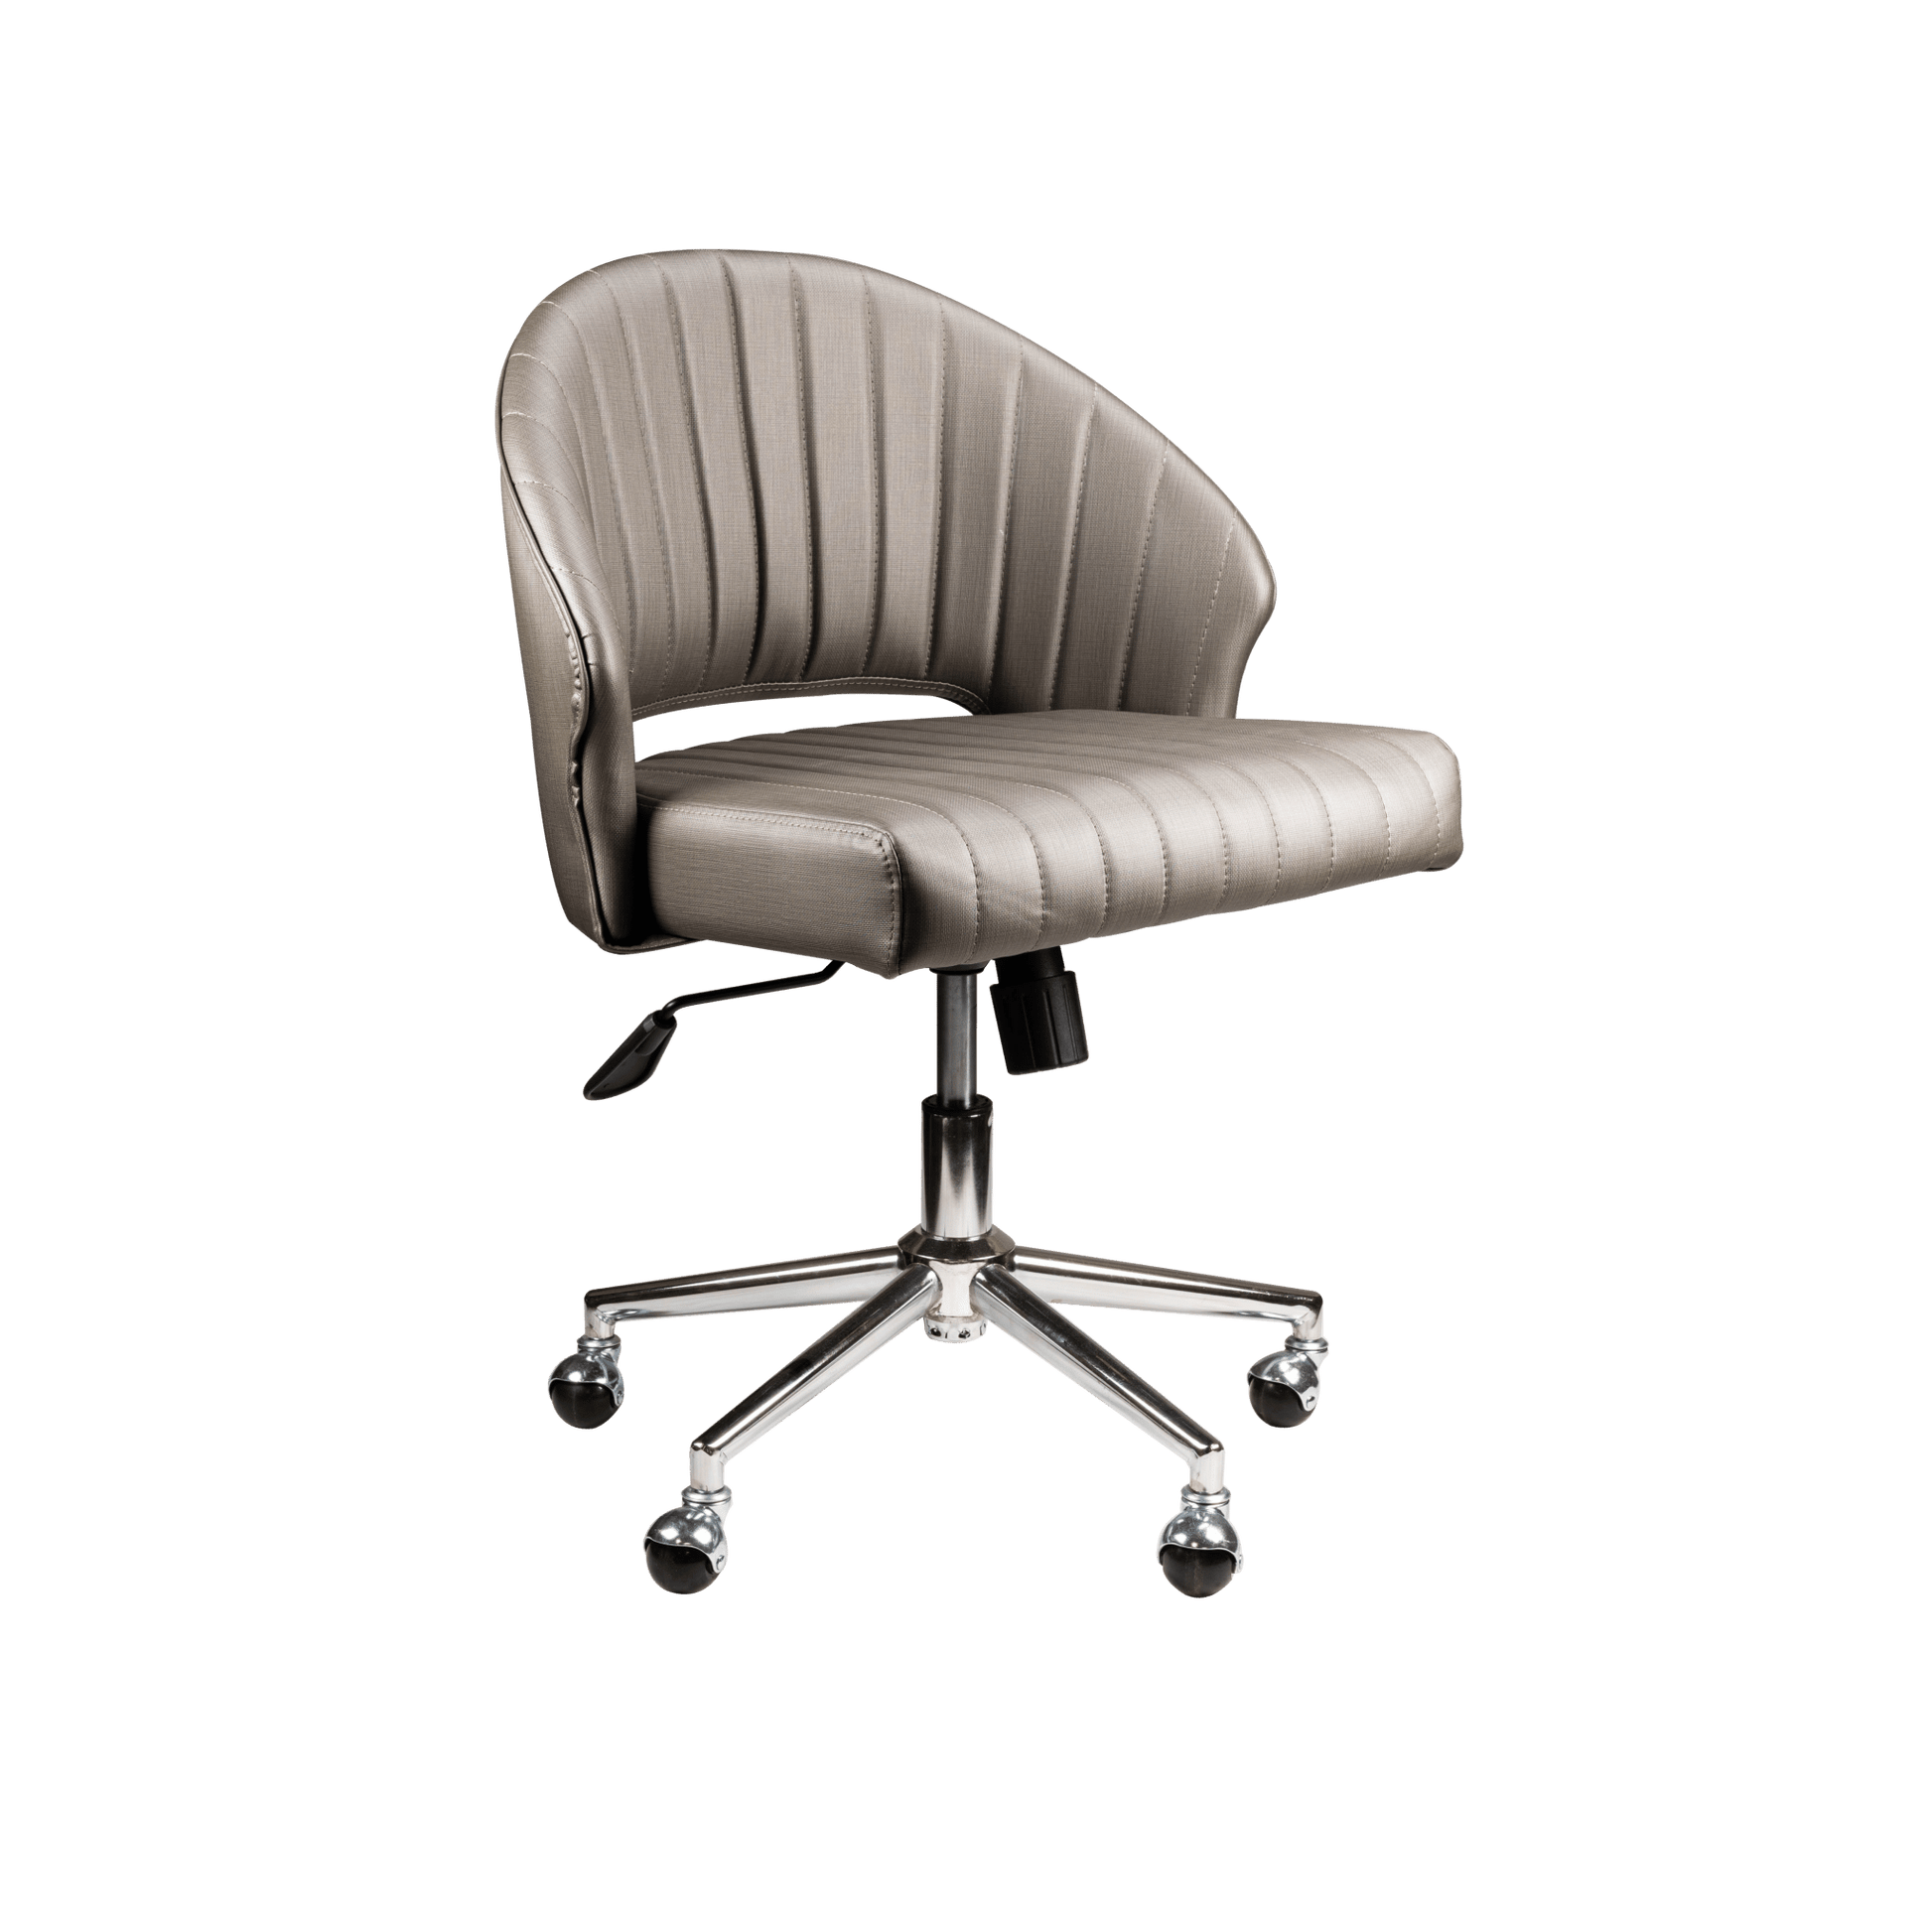 Omni Customer/Waiting Chairs - W.S. Industries, Inc.